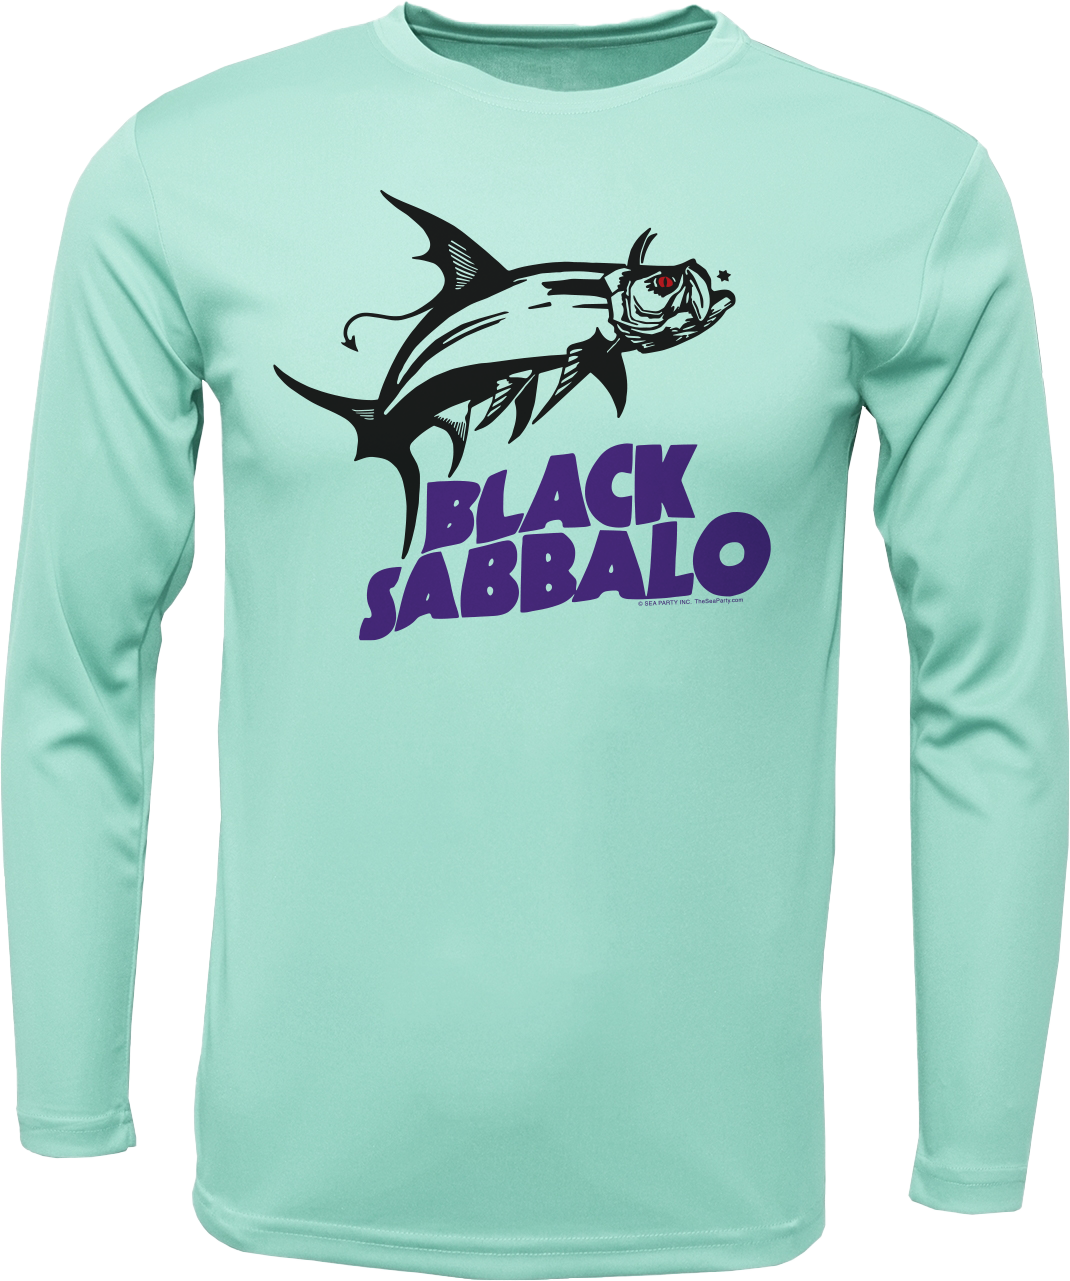 Black Sabbalo LS Performance Crew